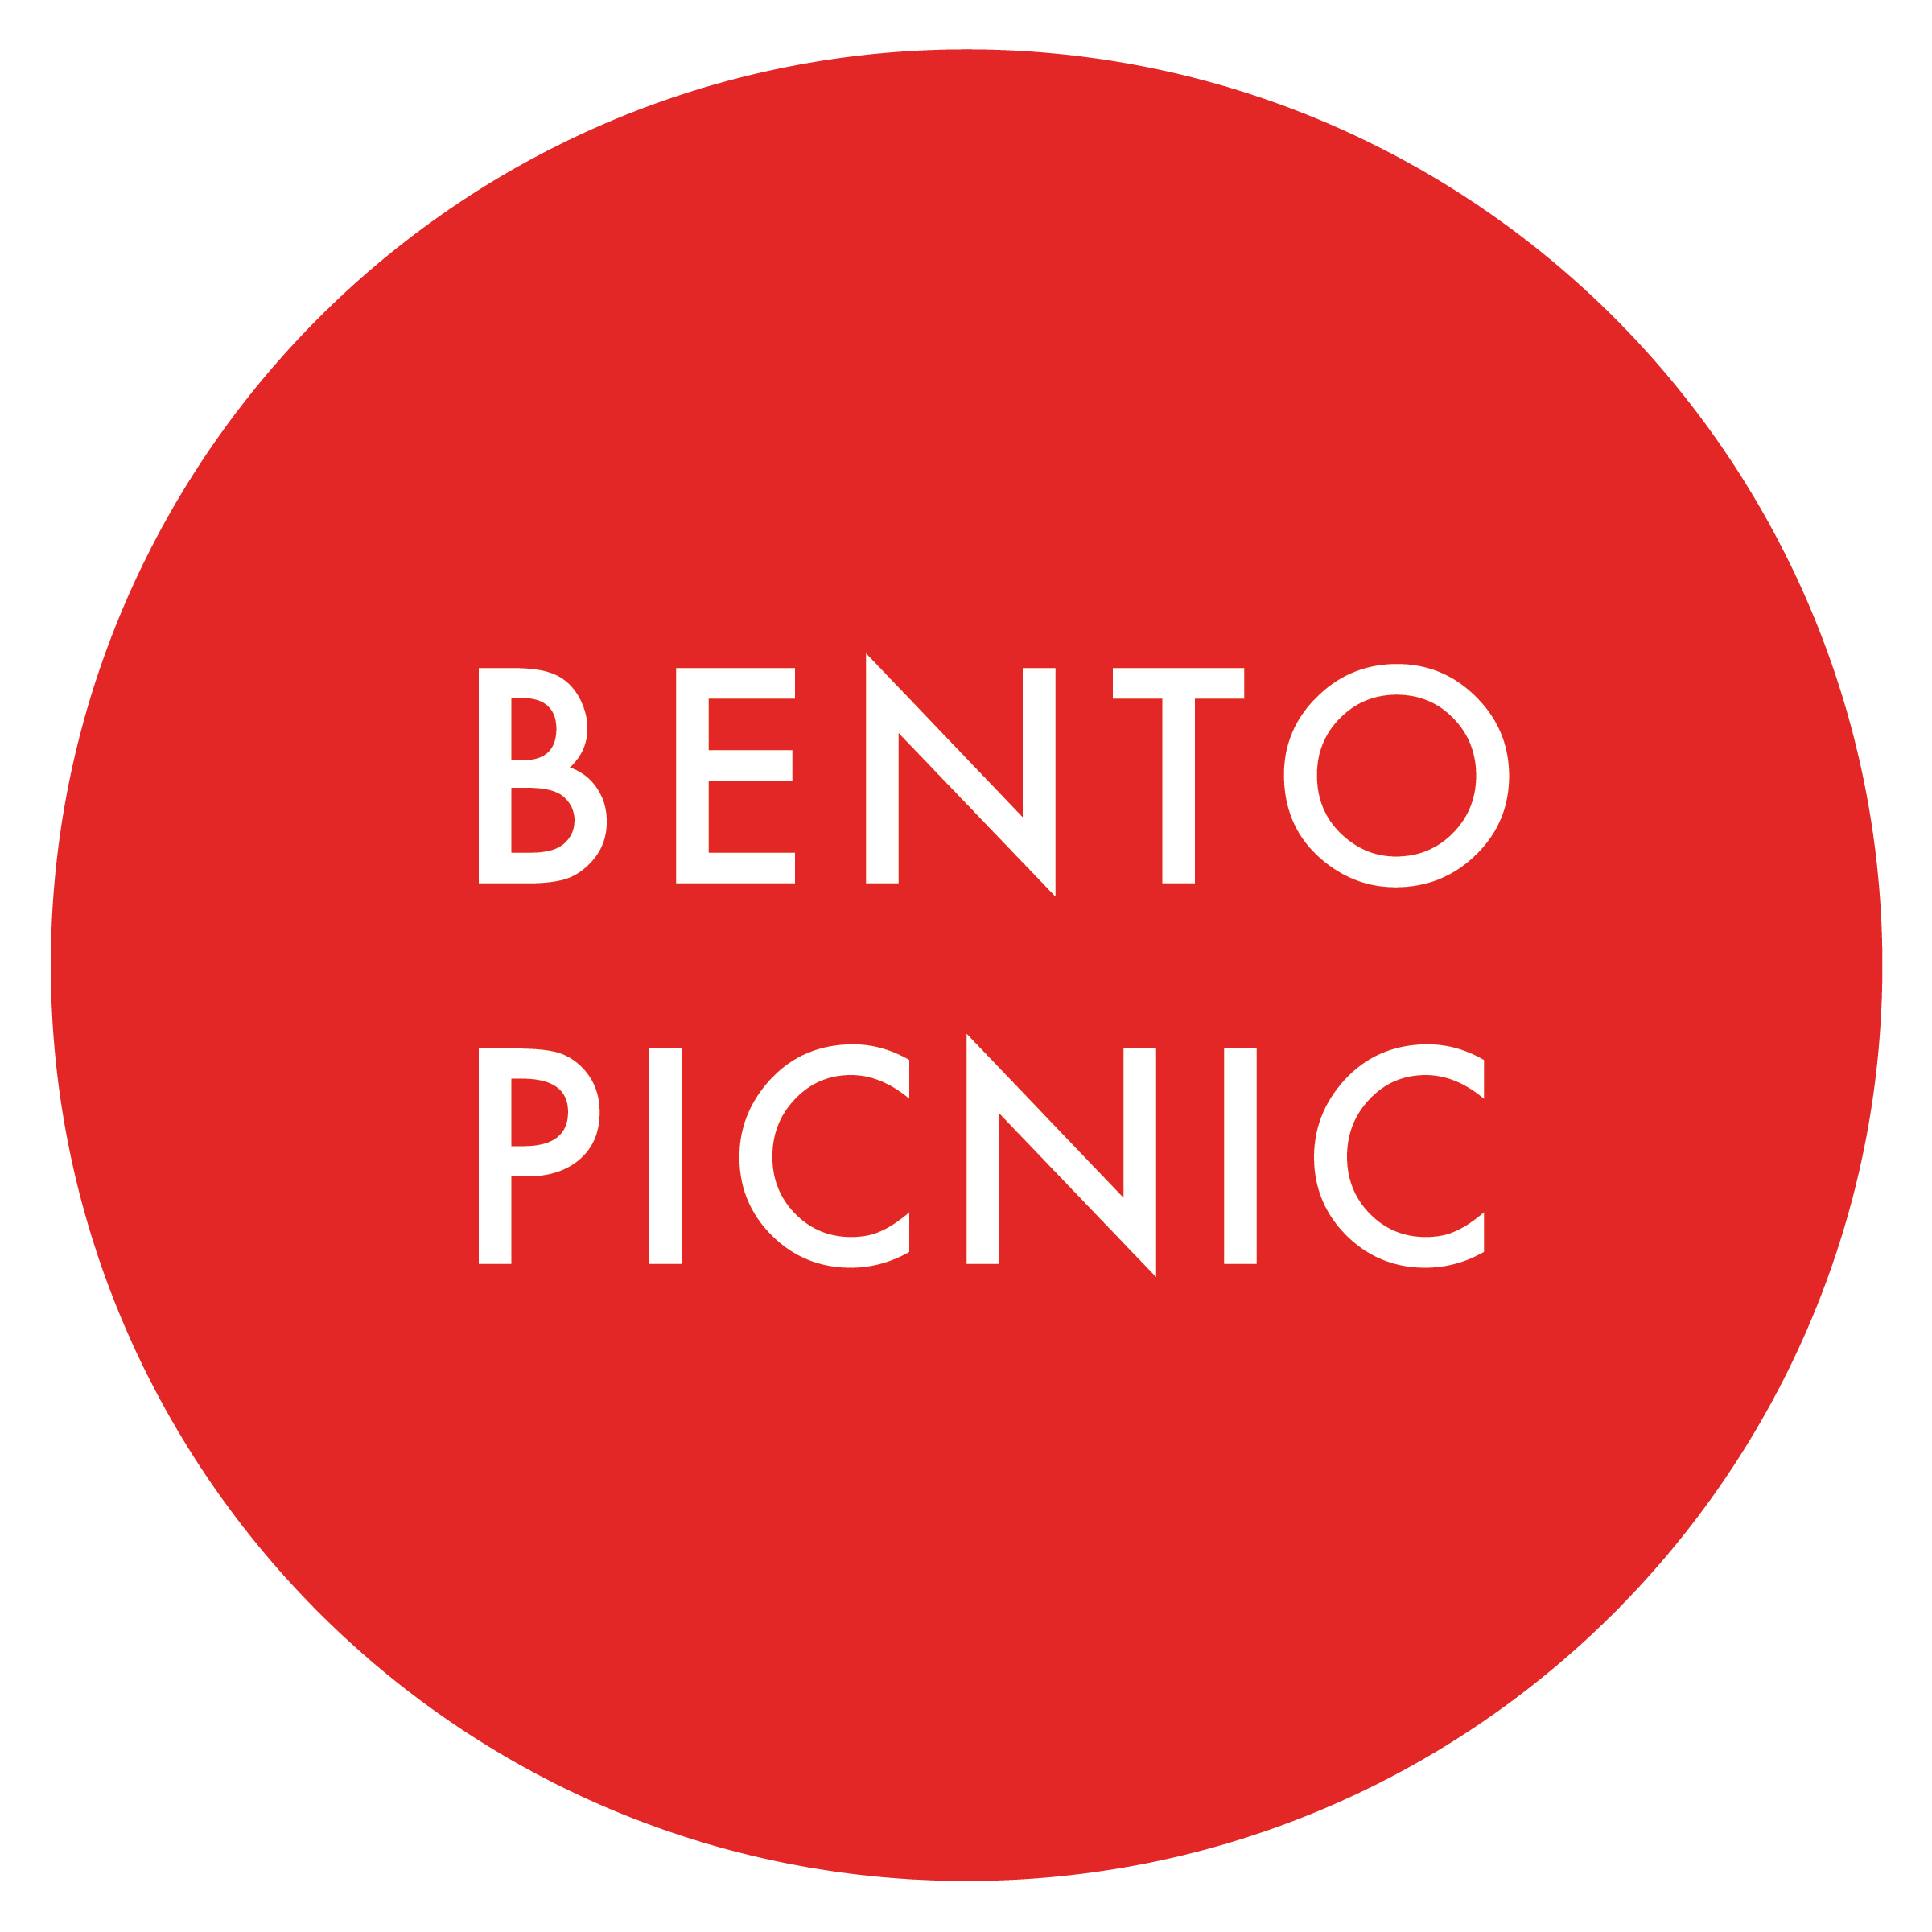 Let's lunch. Бенто логотип. Бенто лого. Bento logo.